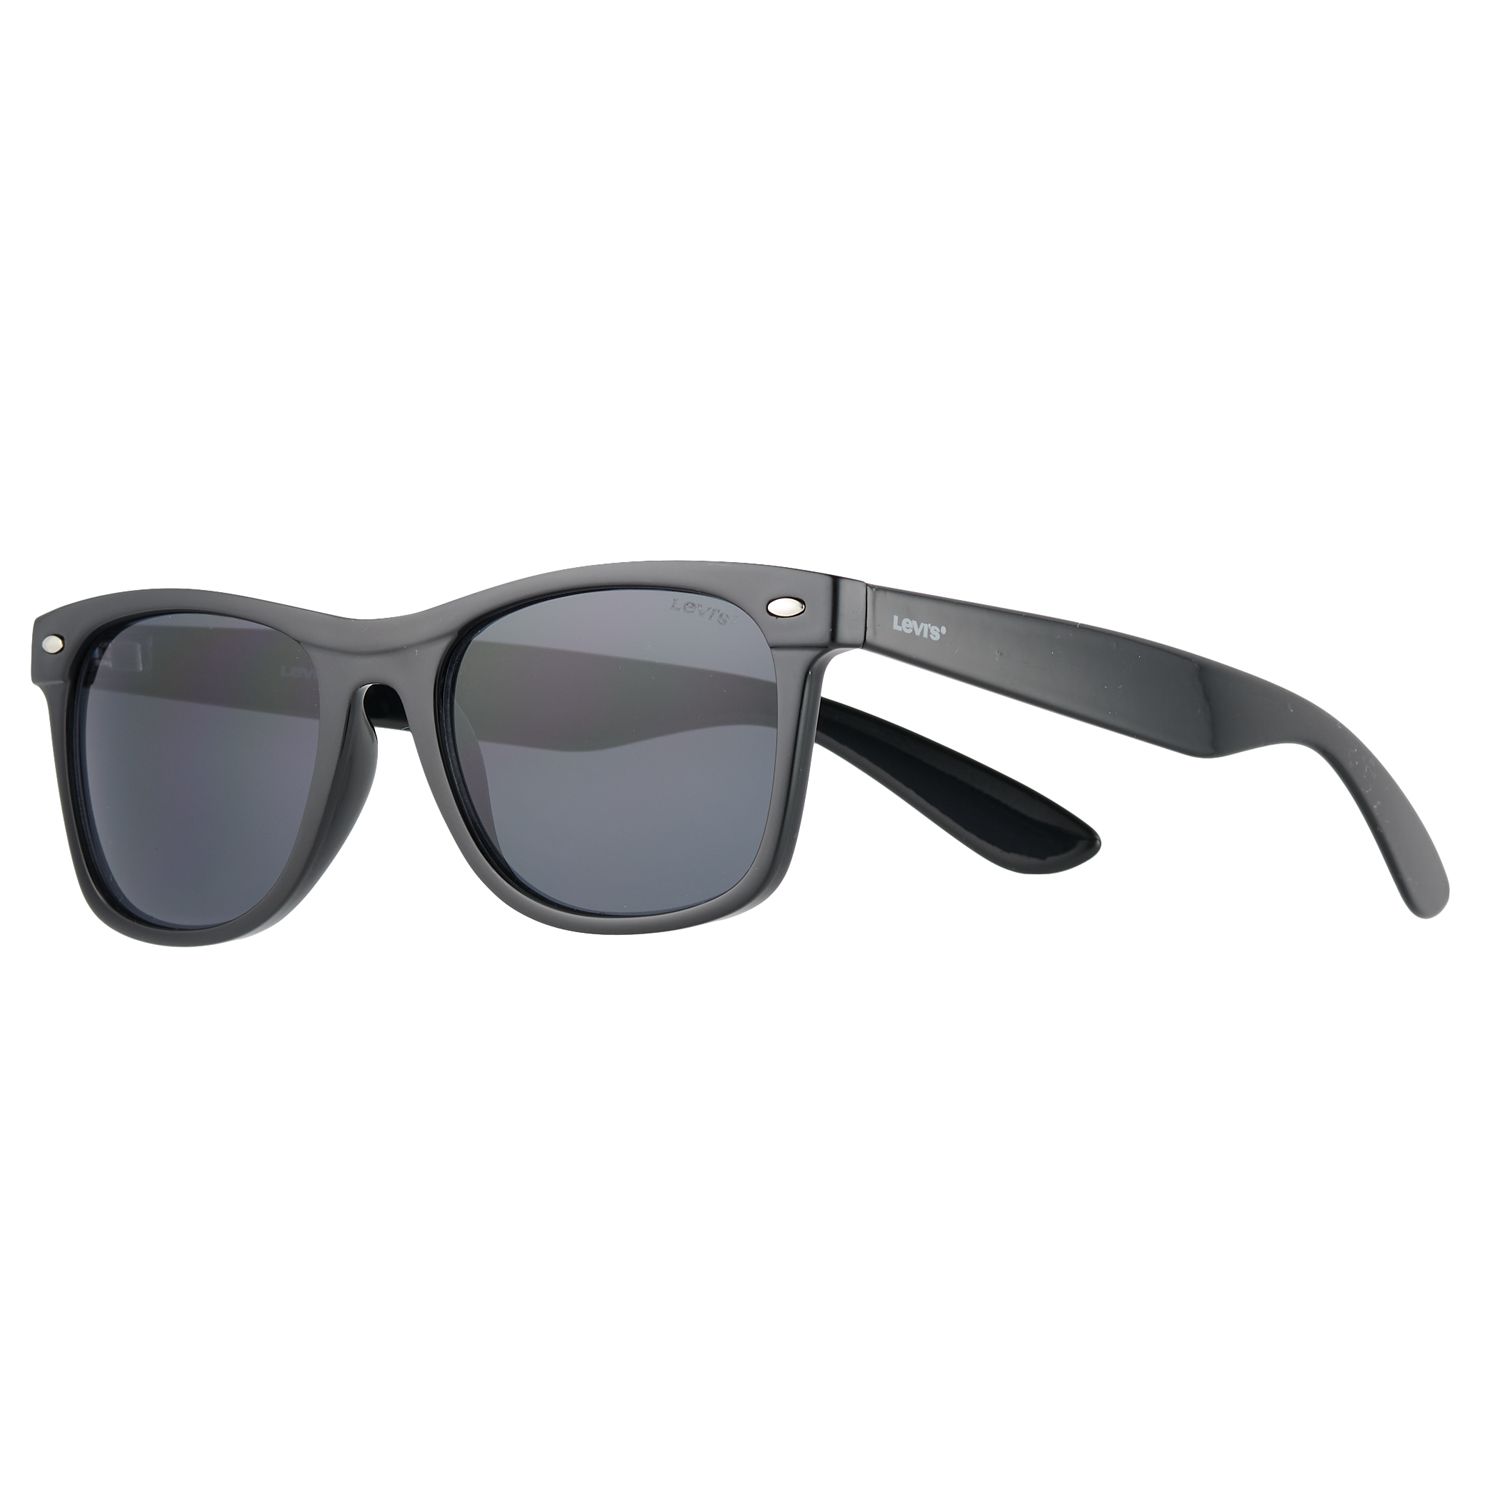 53mm wayfarer sunglasses